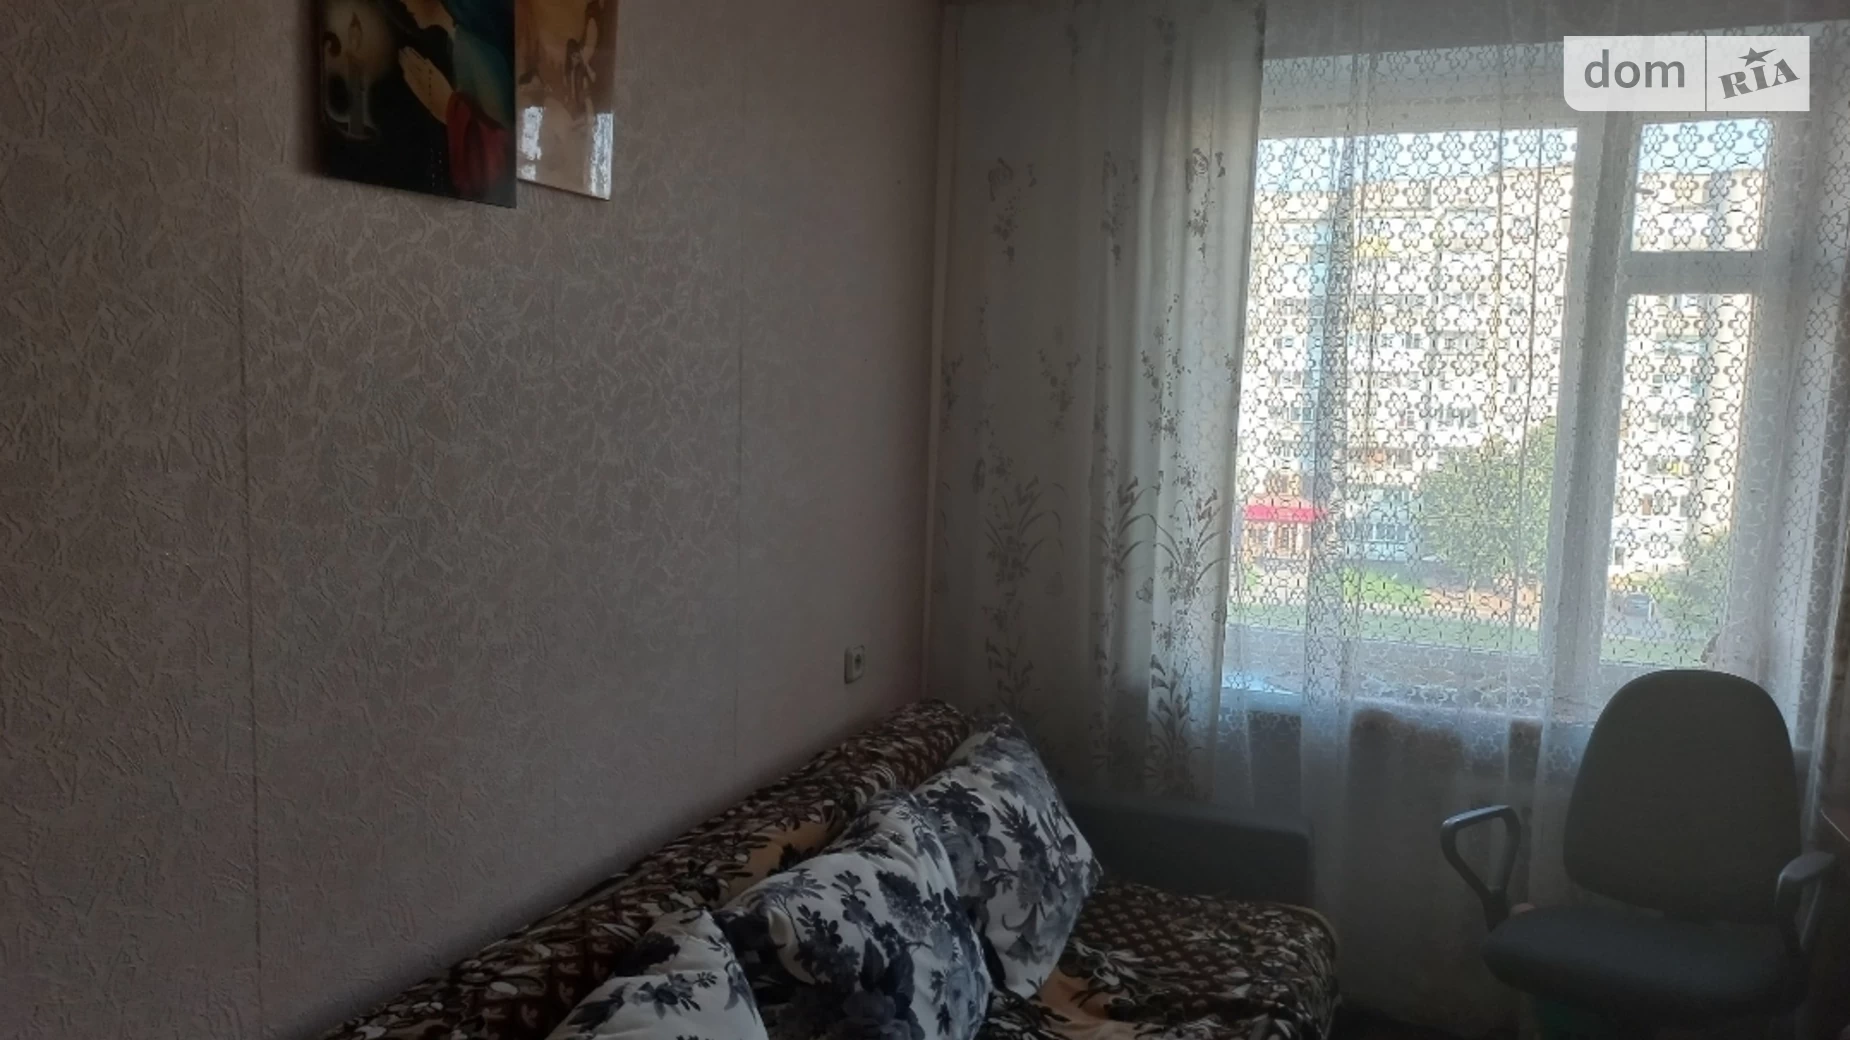 3-кімнатна квартира 64.9 кв. м у Луцьку - фото 4